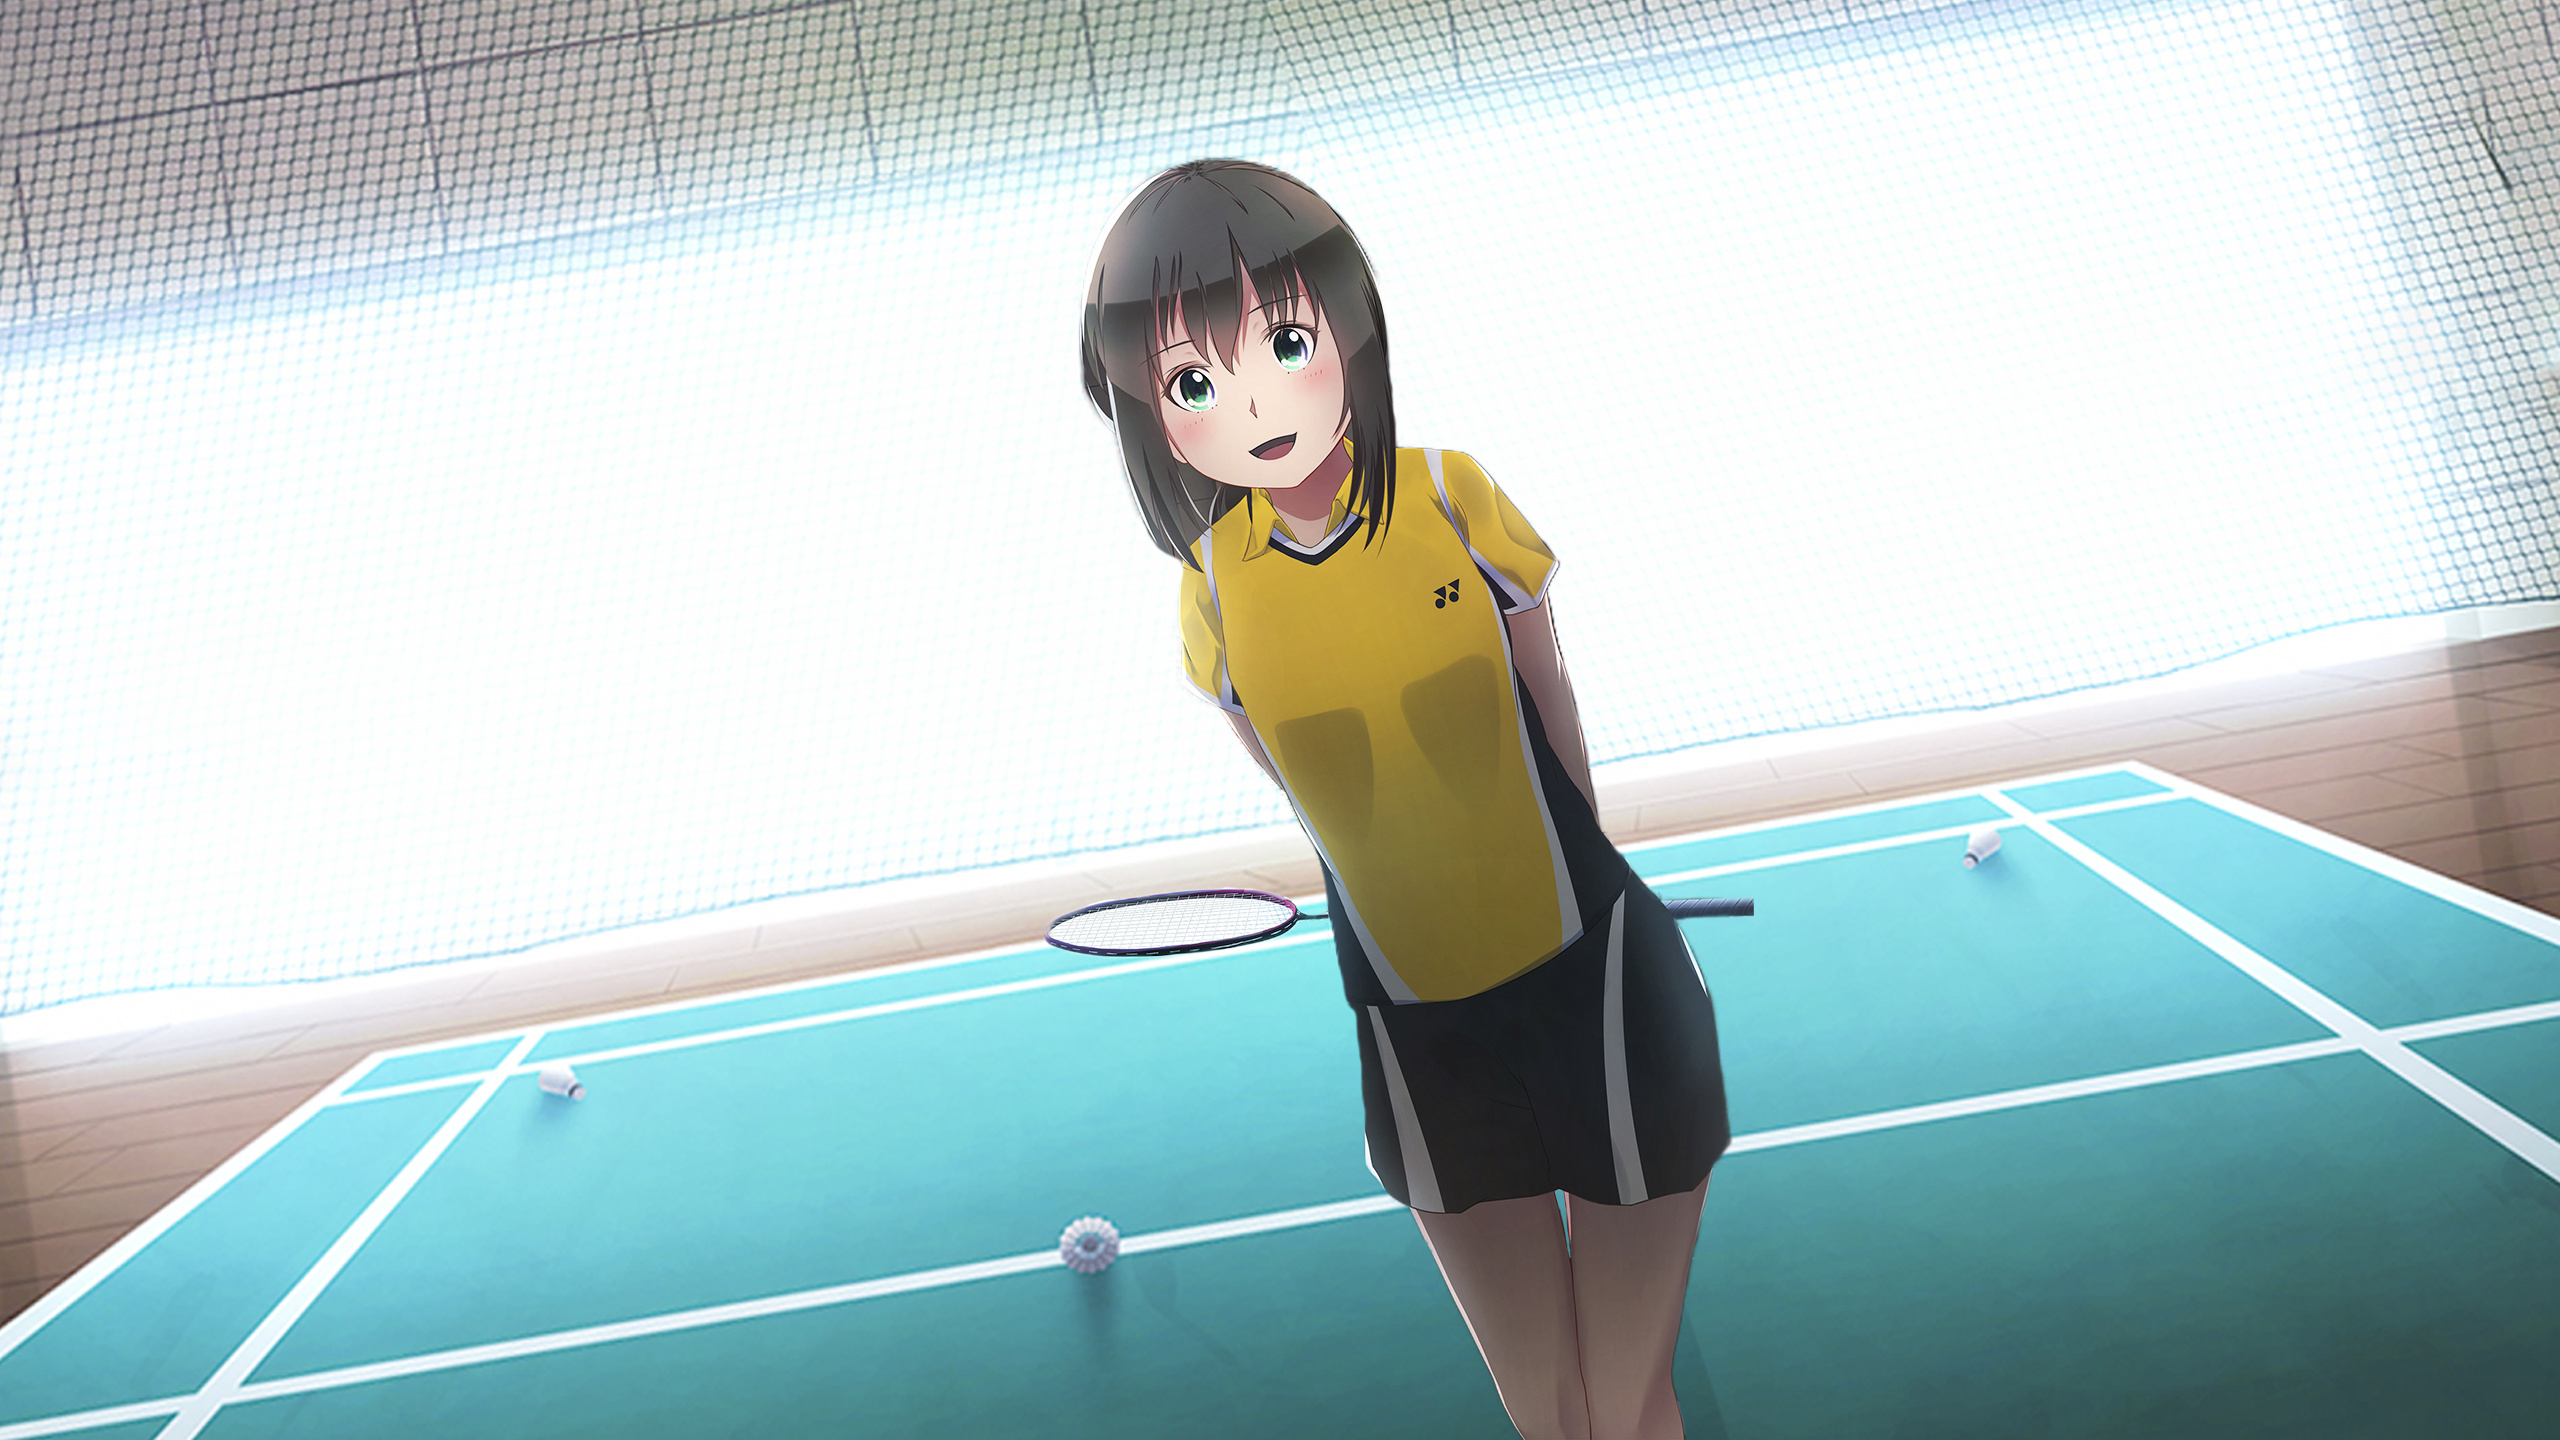 Hanebado! (Anime): An important badminton match, First year of high school. 2560x1440 HD Wallpaper.